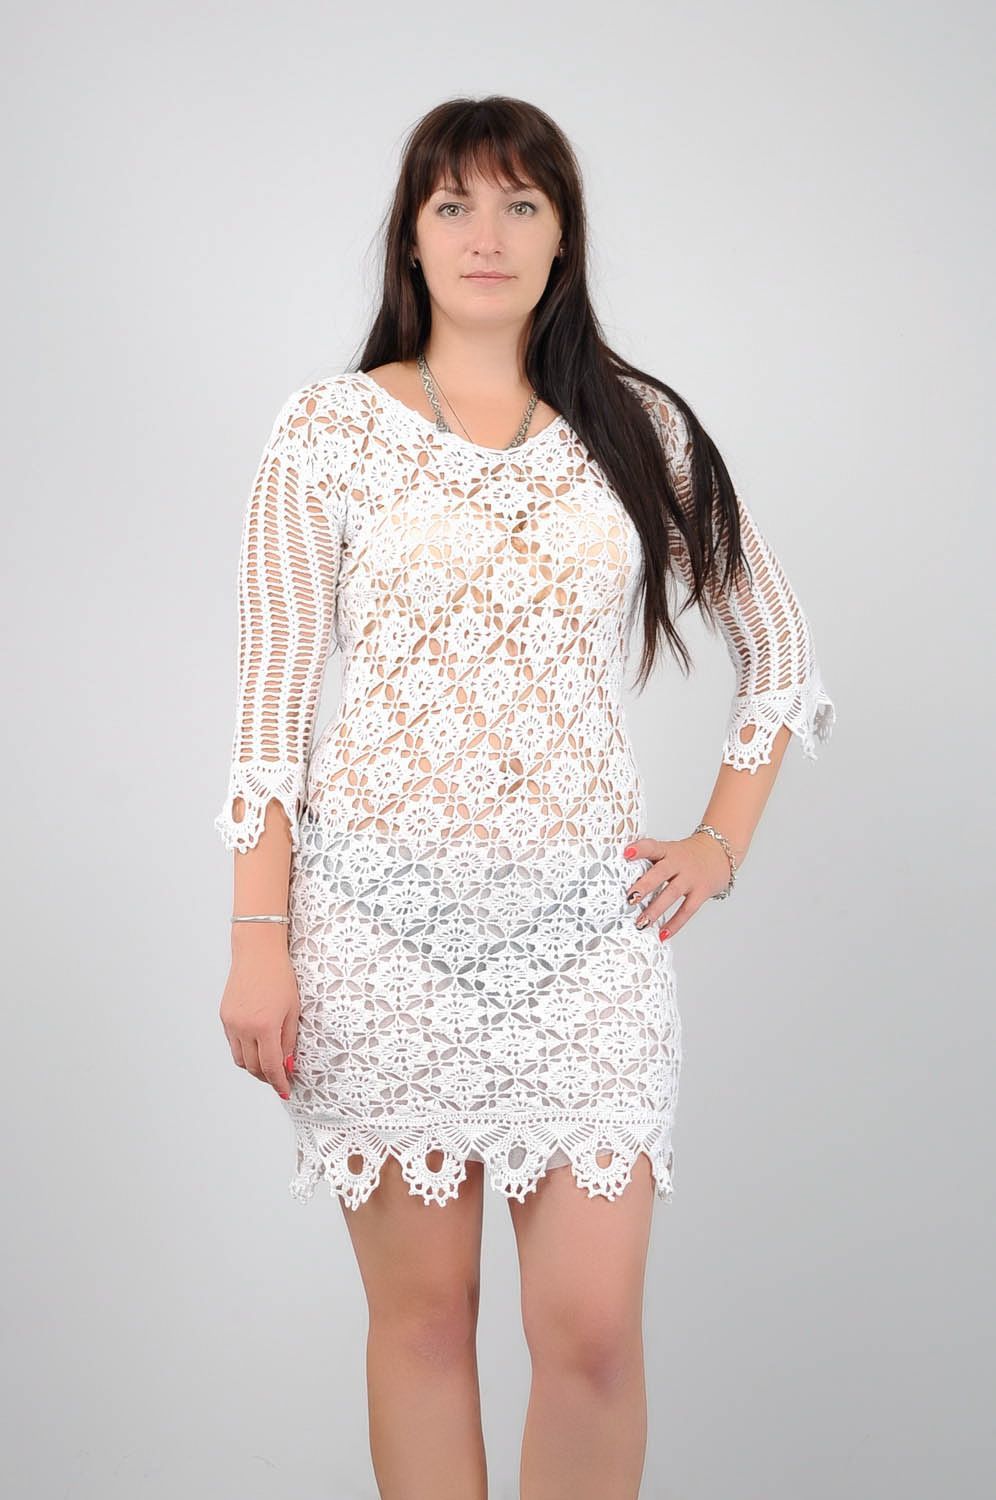 White-Snow Crocheted Dress photo 1